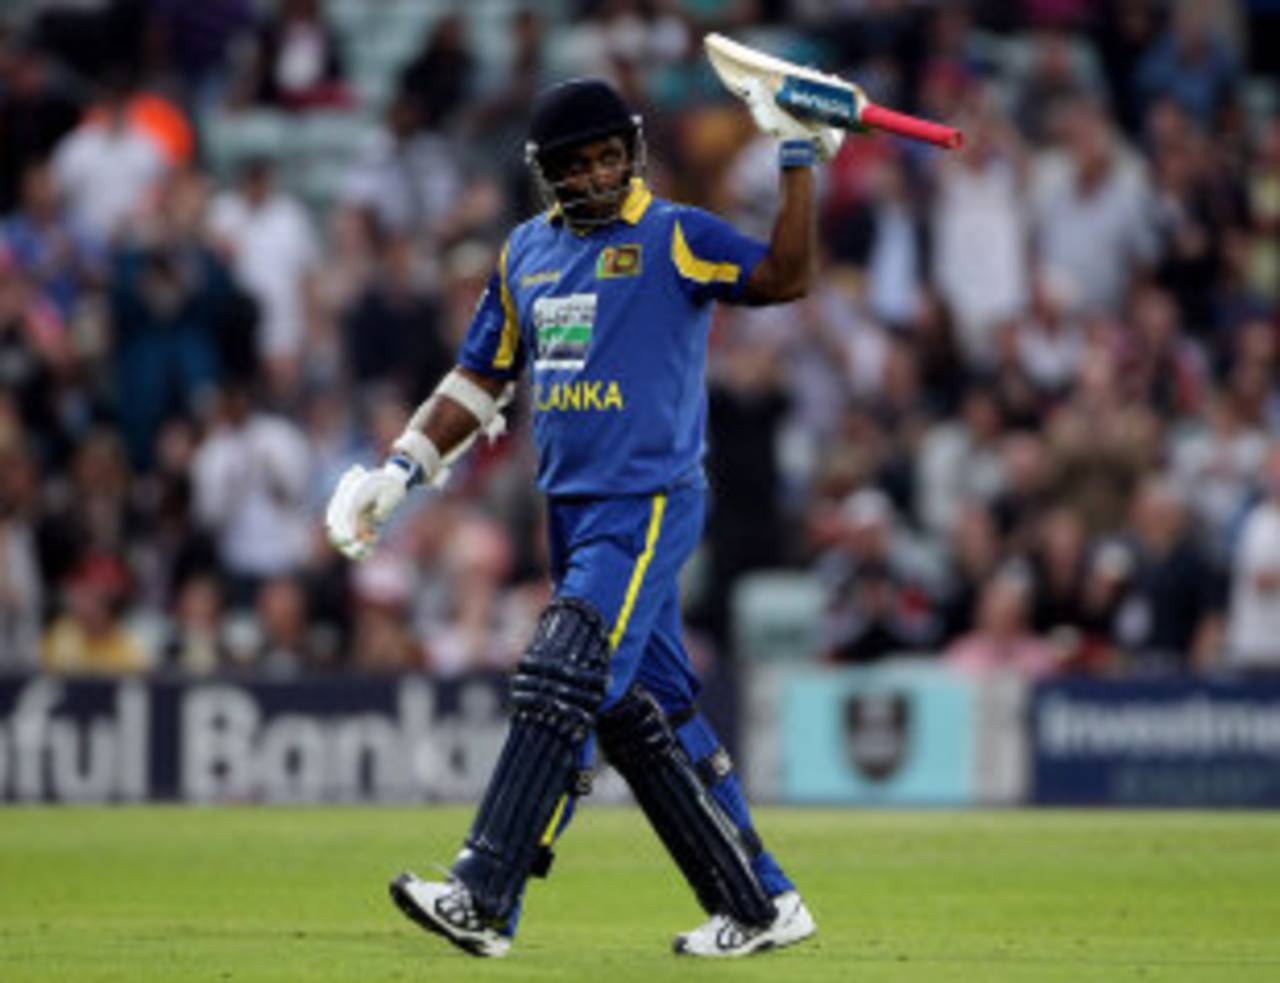 Former Sri Lanka captain Sanath Jayasuriya will lead the 'World XI' team&nbsp;&nbsp;&bull;&nbsp;&nbsp;Getty Images